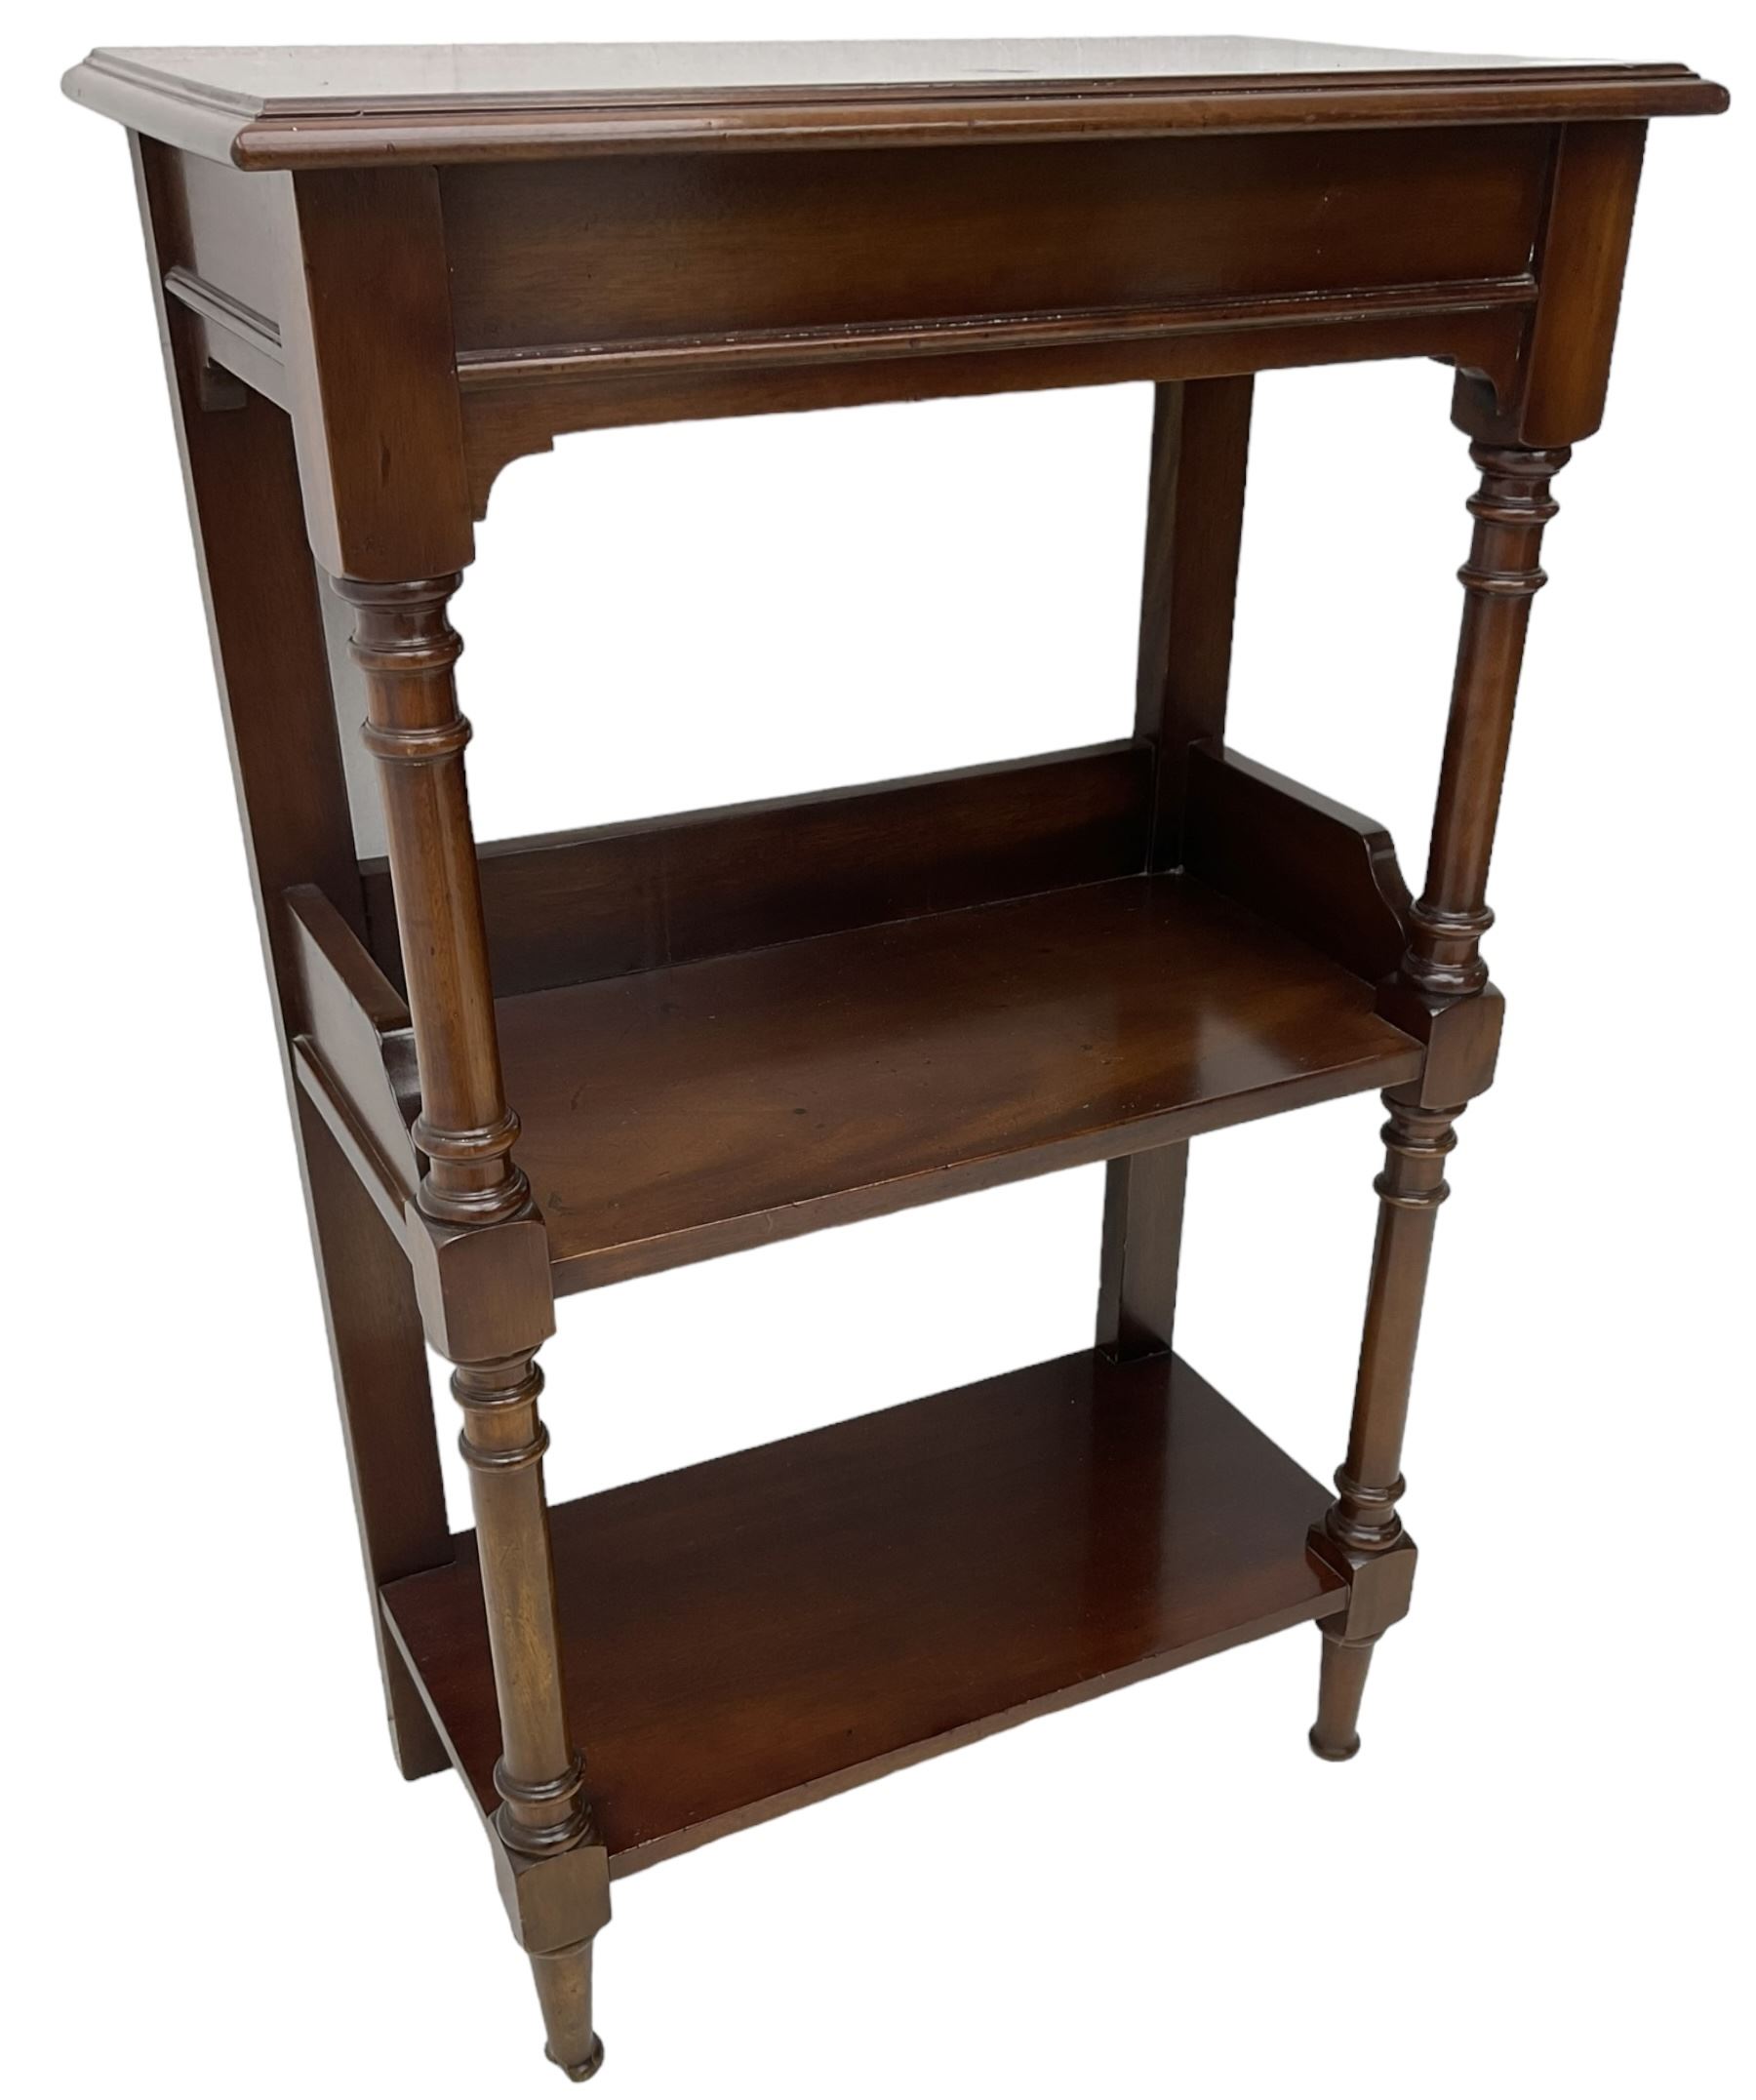 Victorian design mahogany three-tier stand - Image 4 of 7